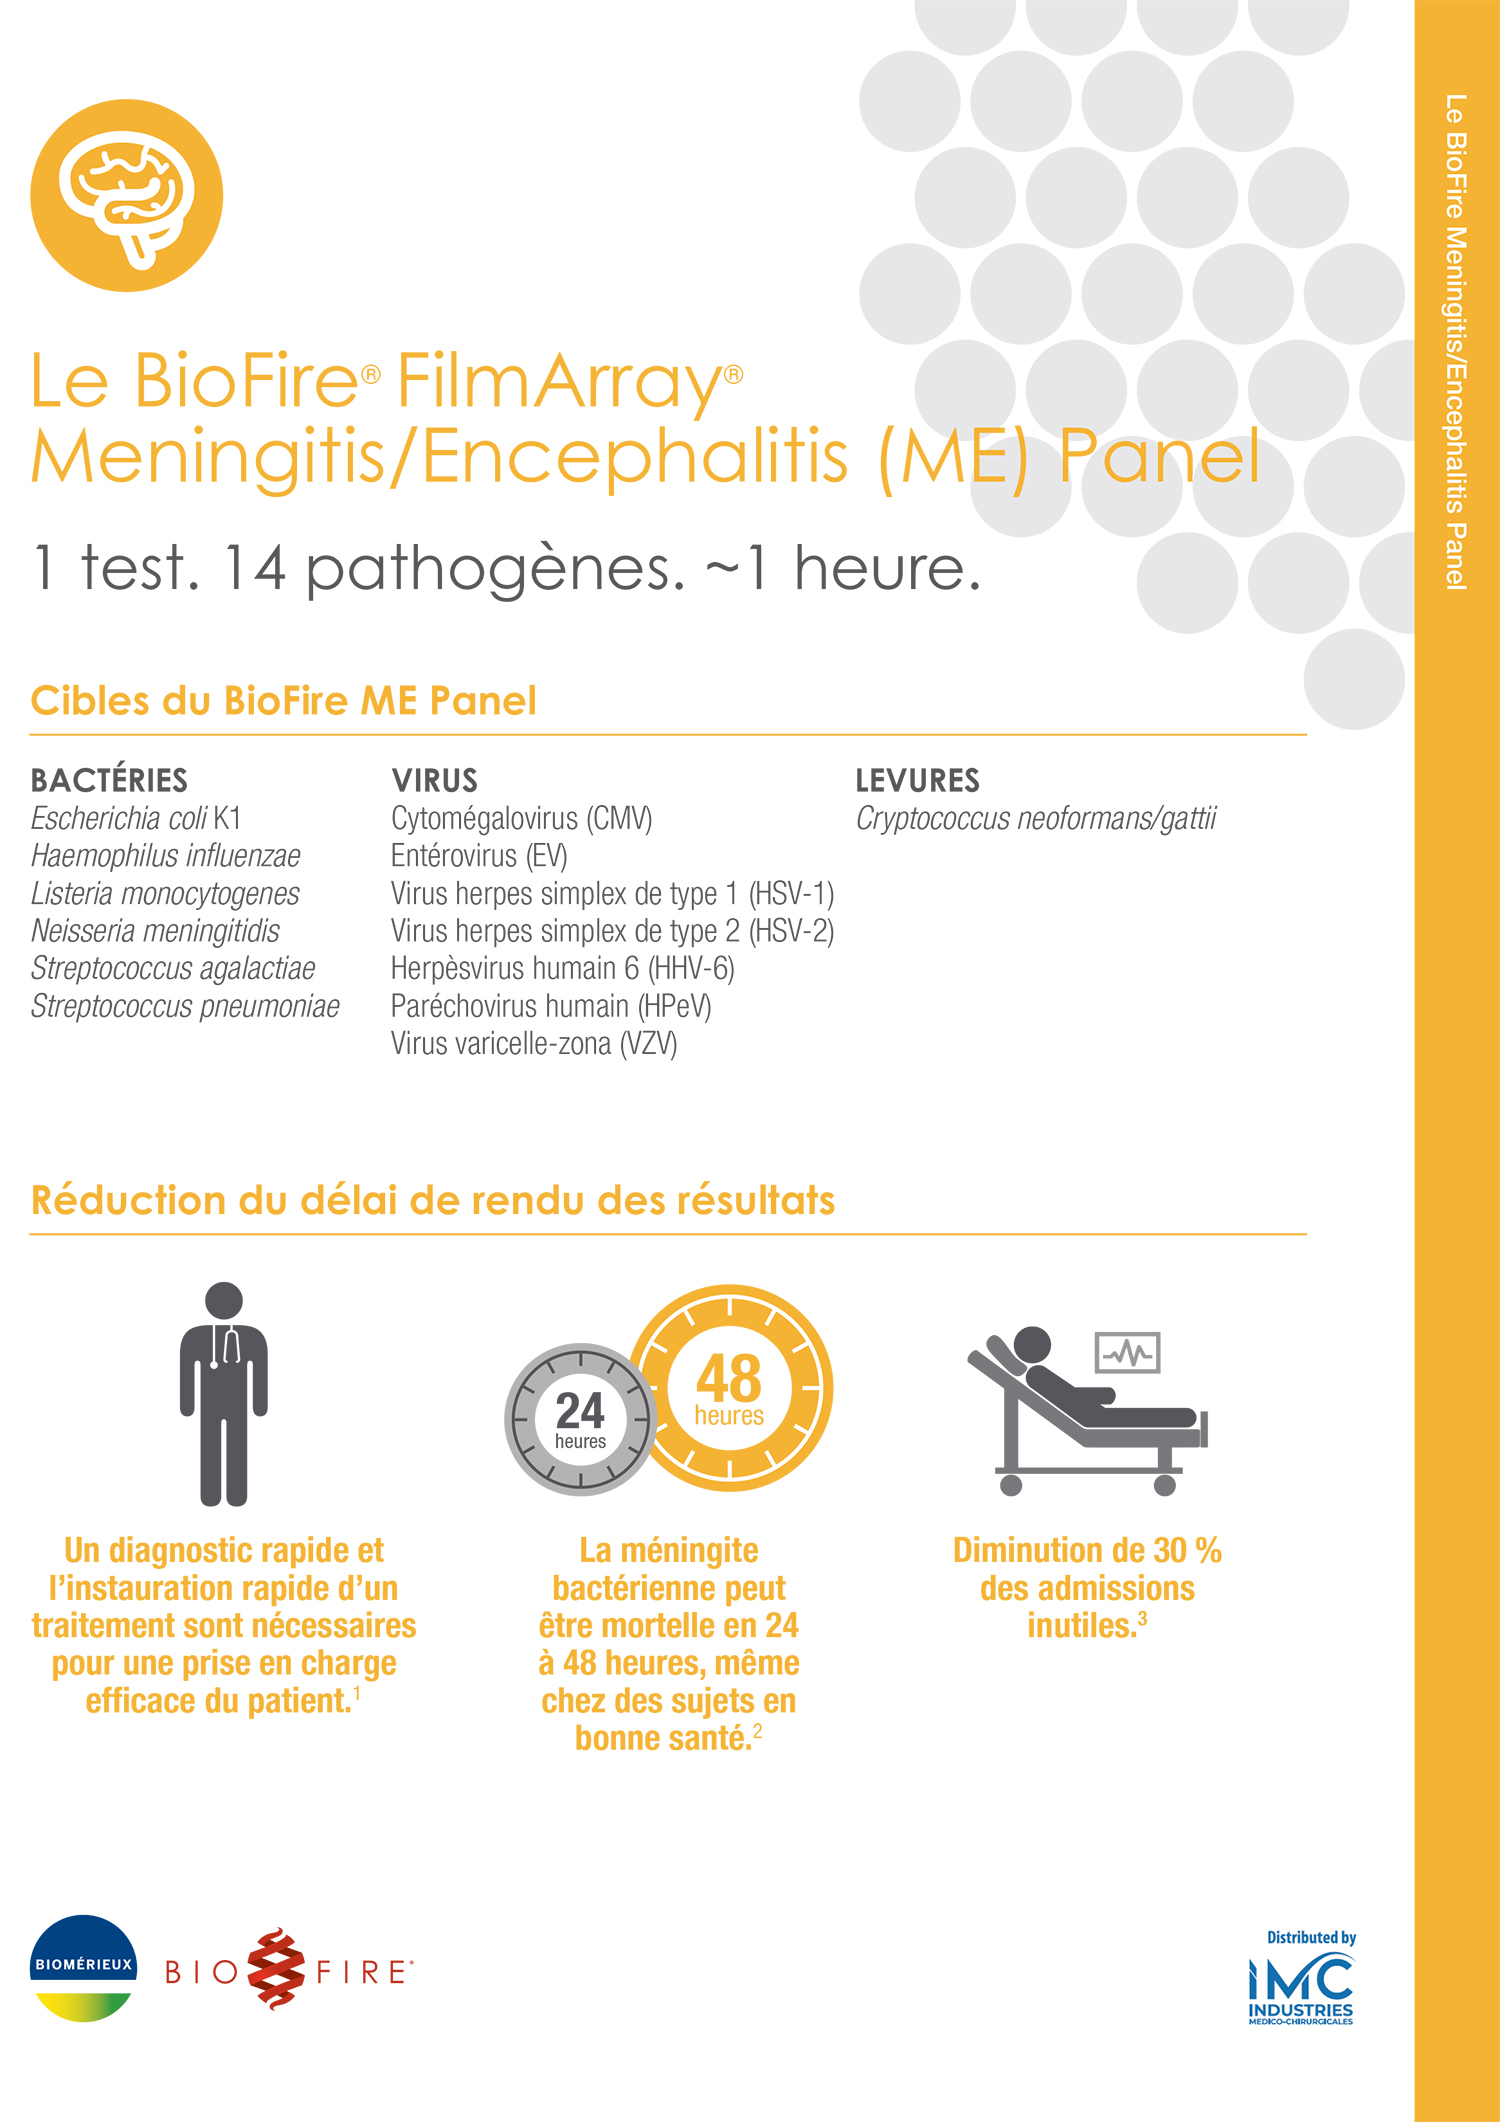 Le BioFire® FilmArray® Meningitis/Encephalitis (ME) Panel